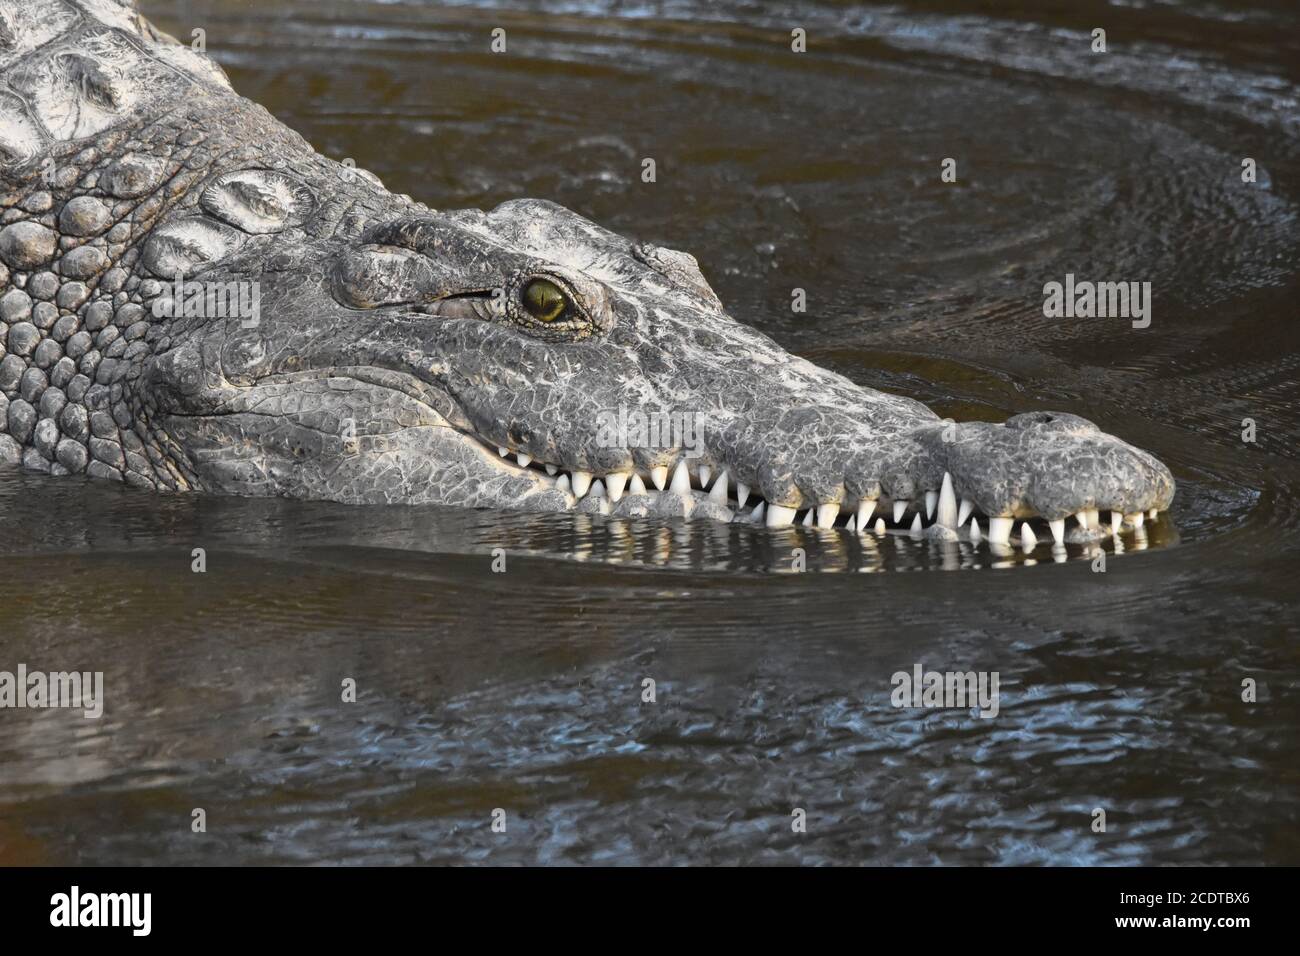 Crocodile head  entering water - closeup Stock Photo